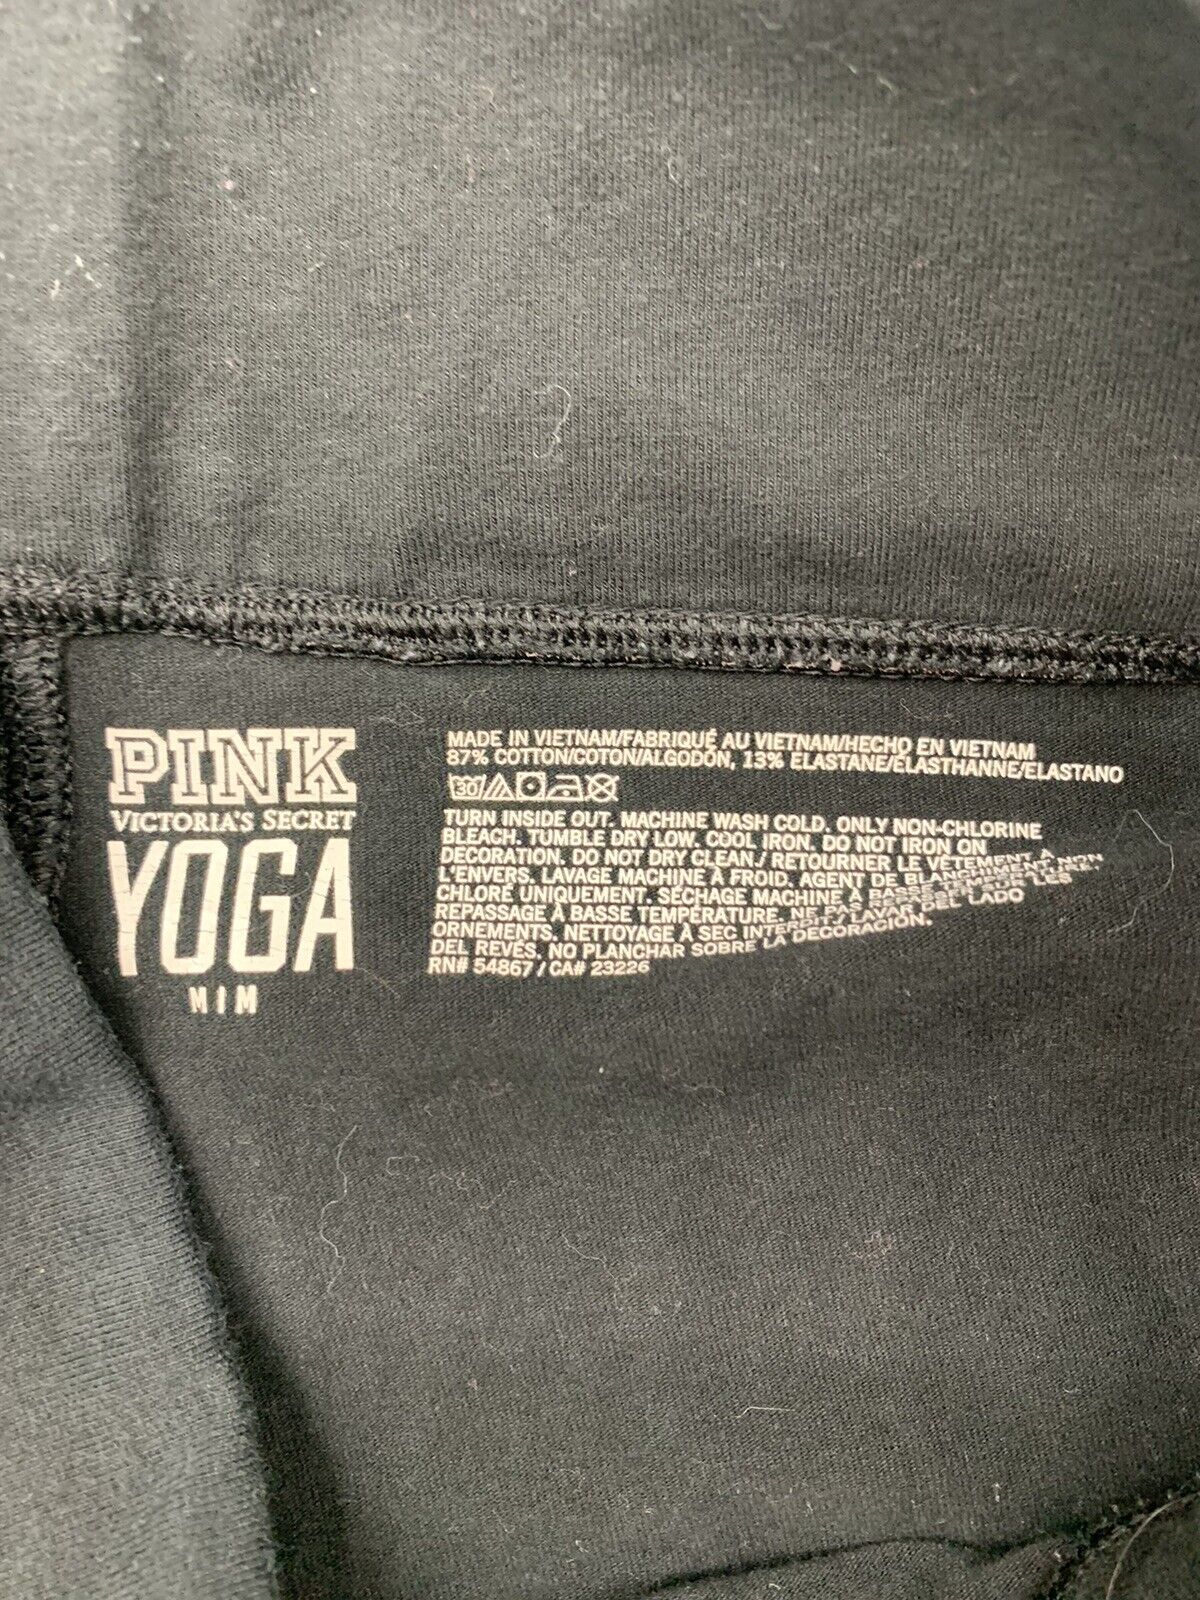 PINK Cotton Yoga Legging  Outfits with leggings, Victoria secret